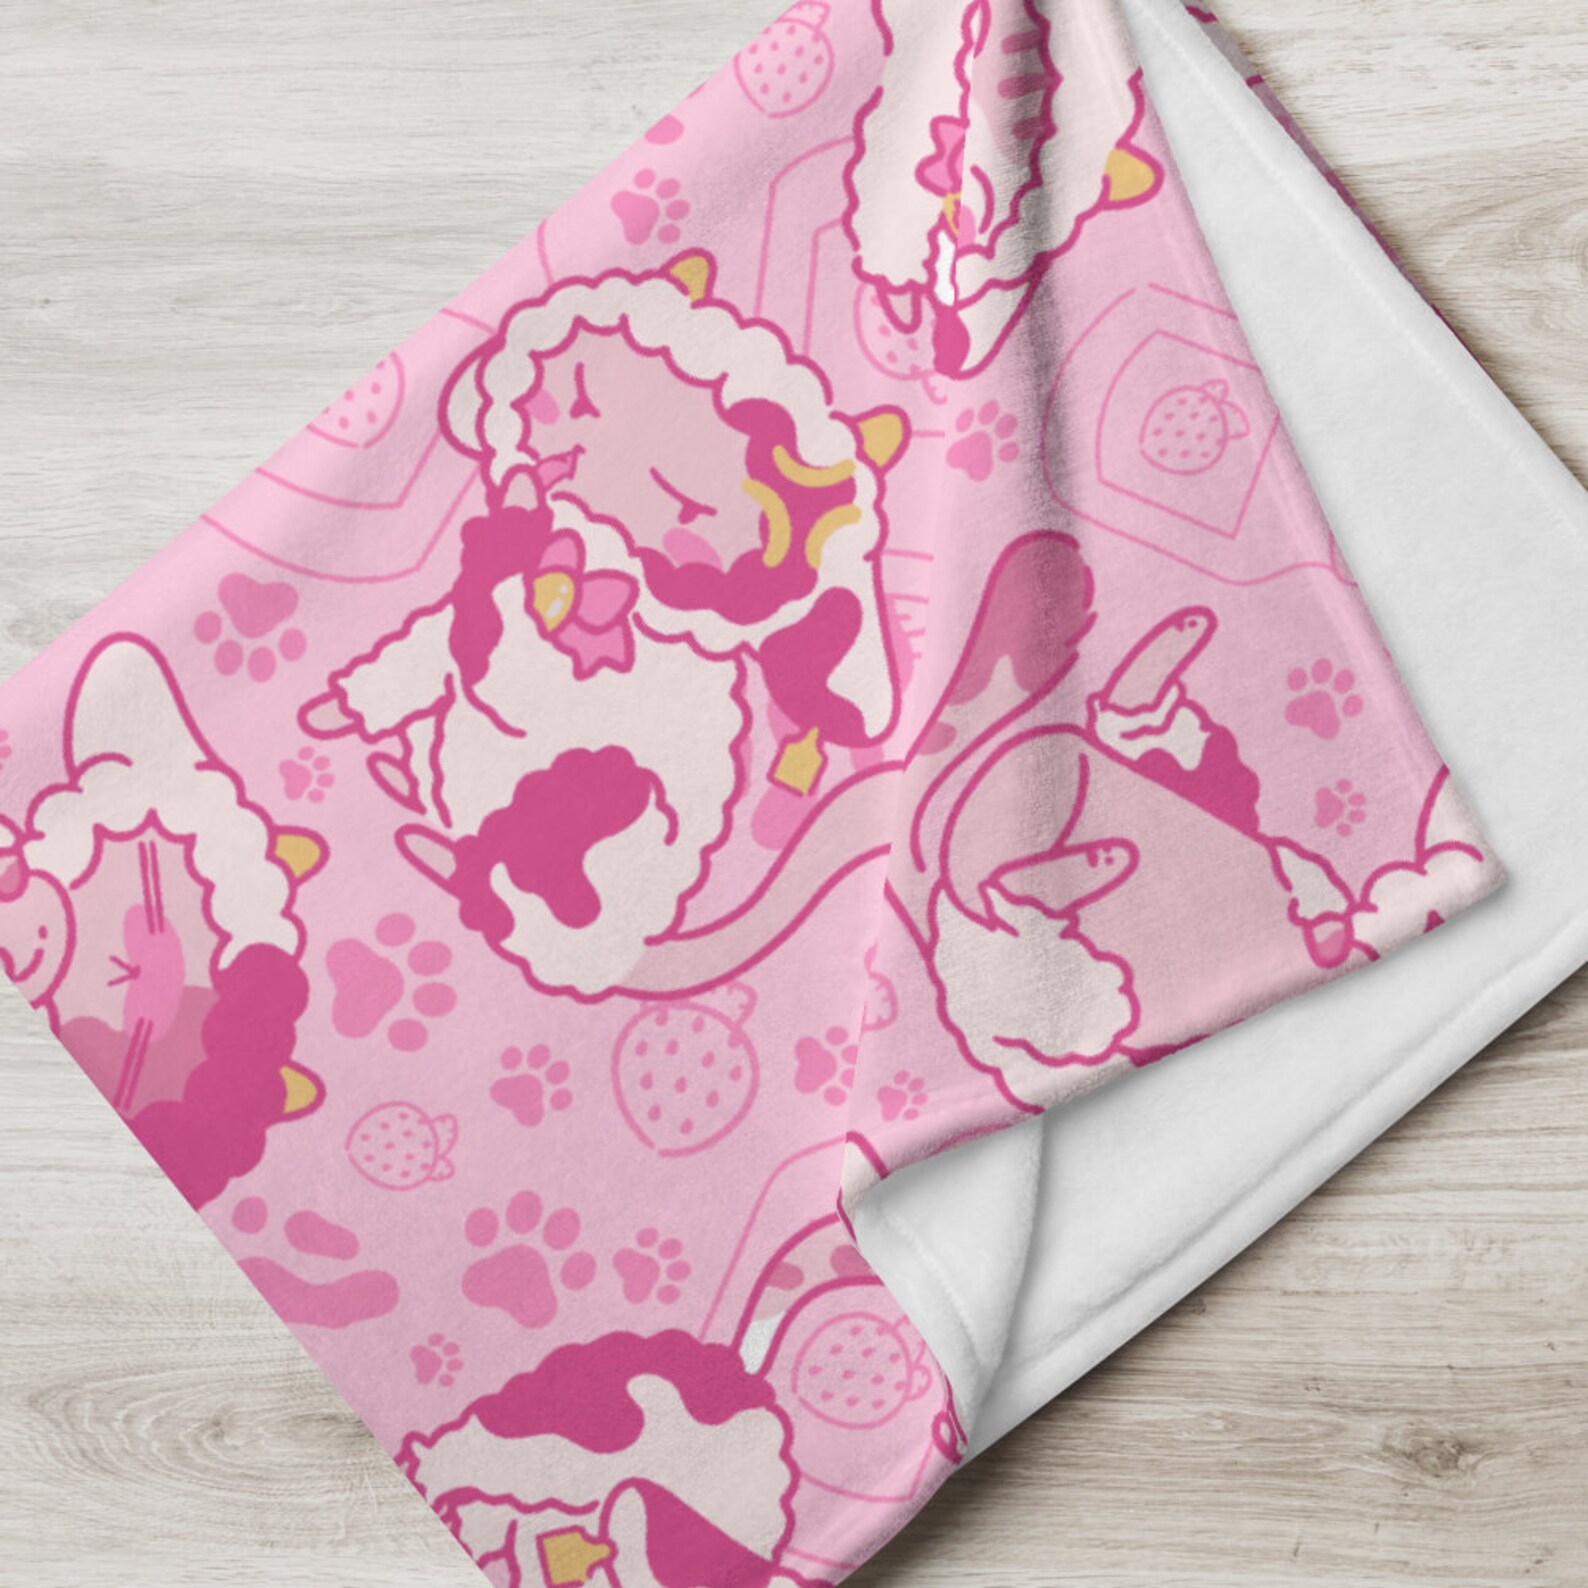 Super soft Strawberry milk cats Throw Blanket kawaii pink | Etsy